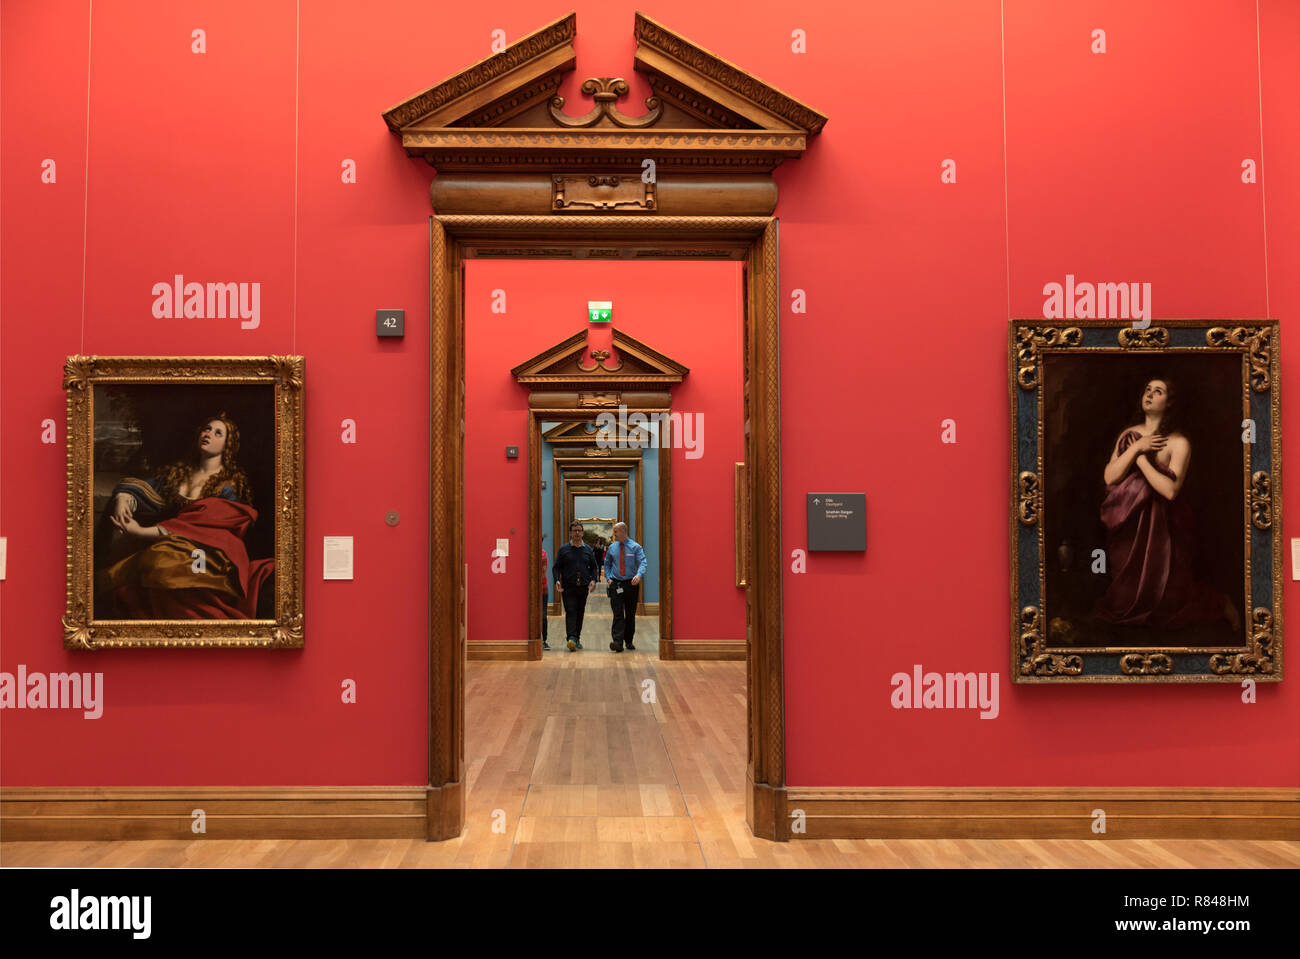 Ireland,Dublin, National Gallery of Ireland, interior with art work and receding corridor Stock Photo